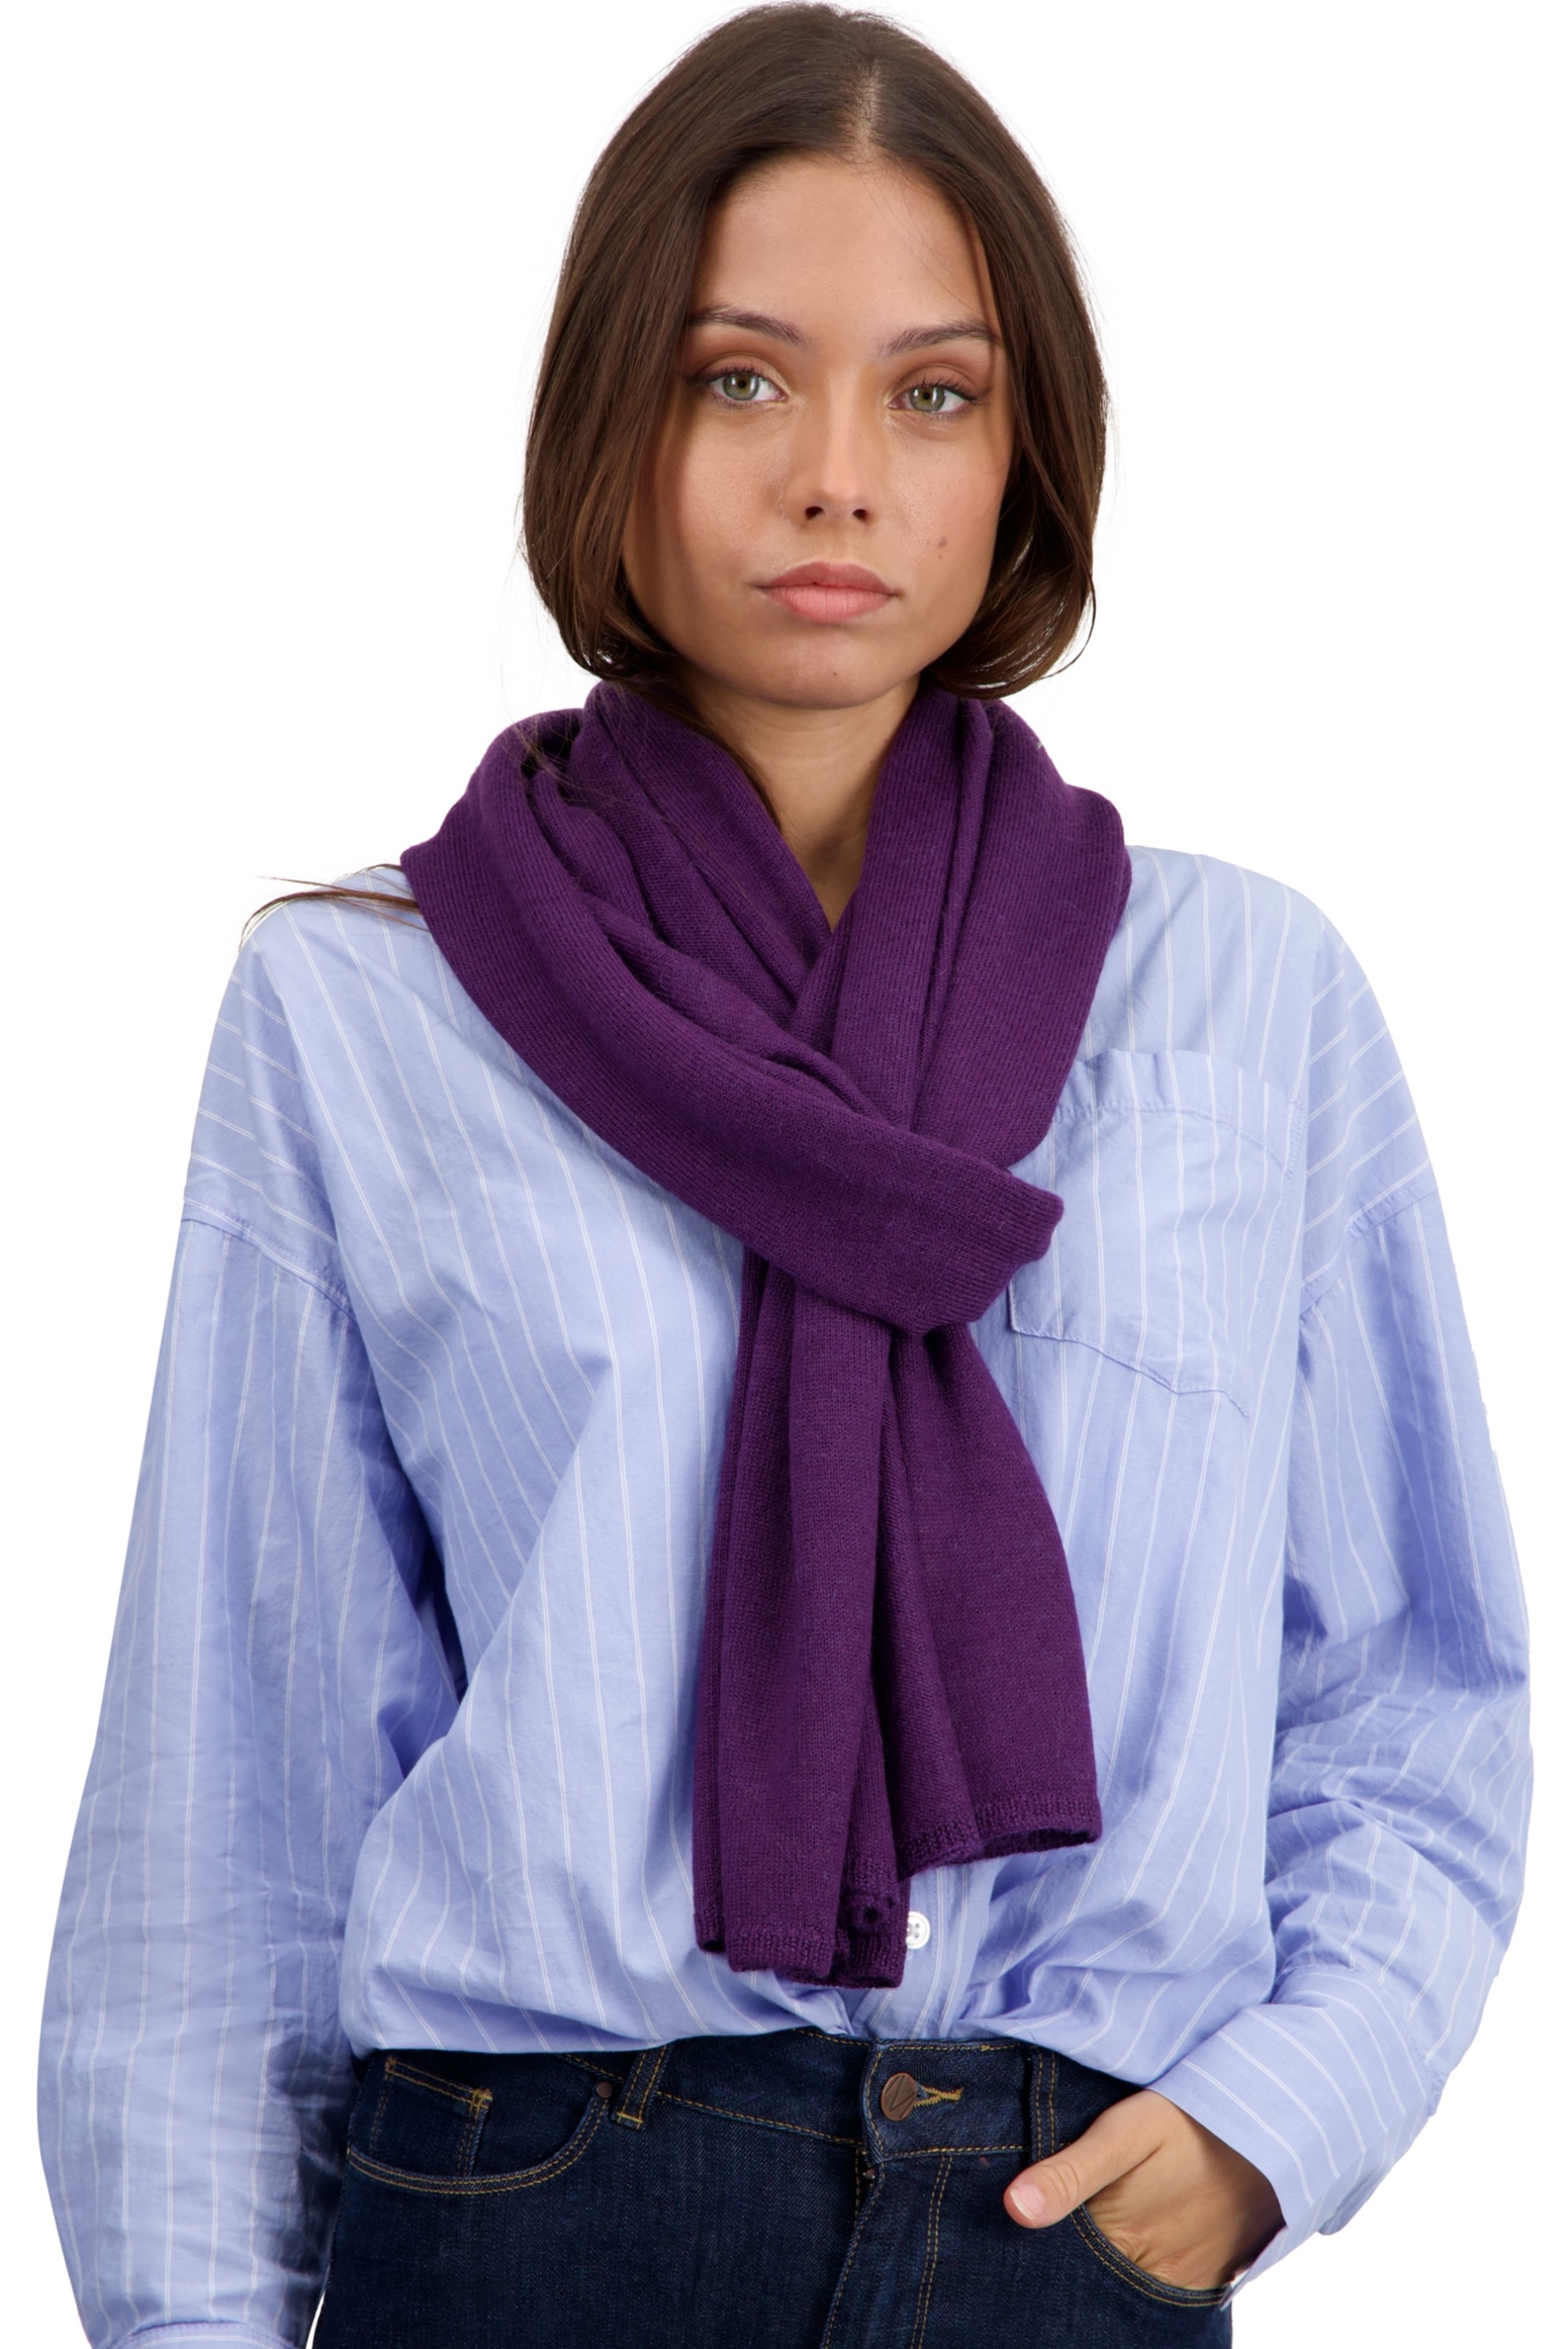 Baby Alpaca accessoires sjaals vancouver purple 210 x 45 cm